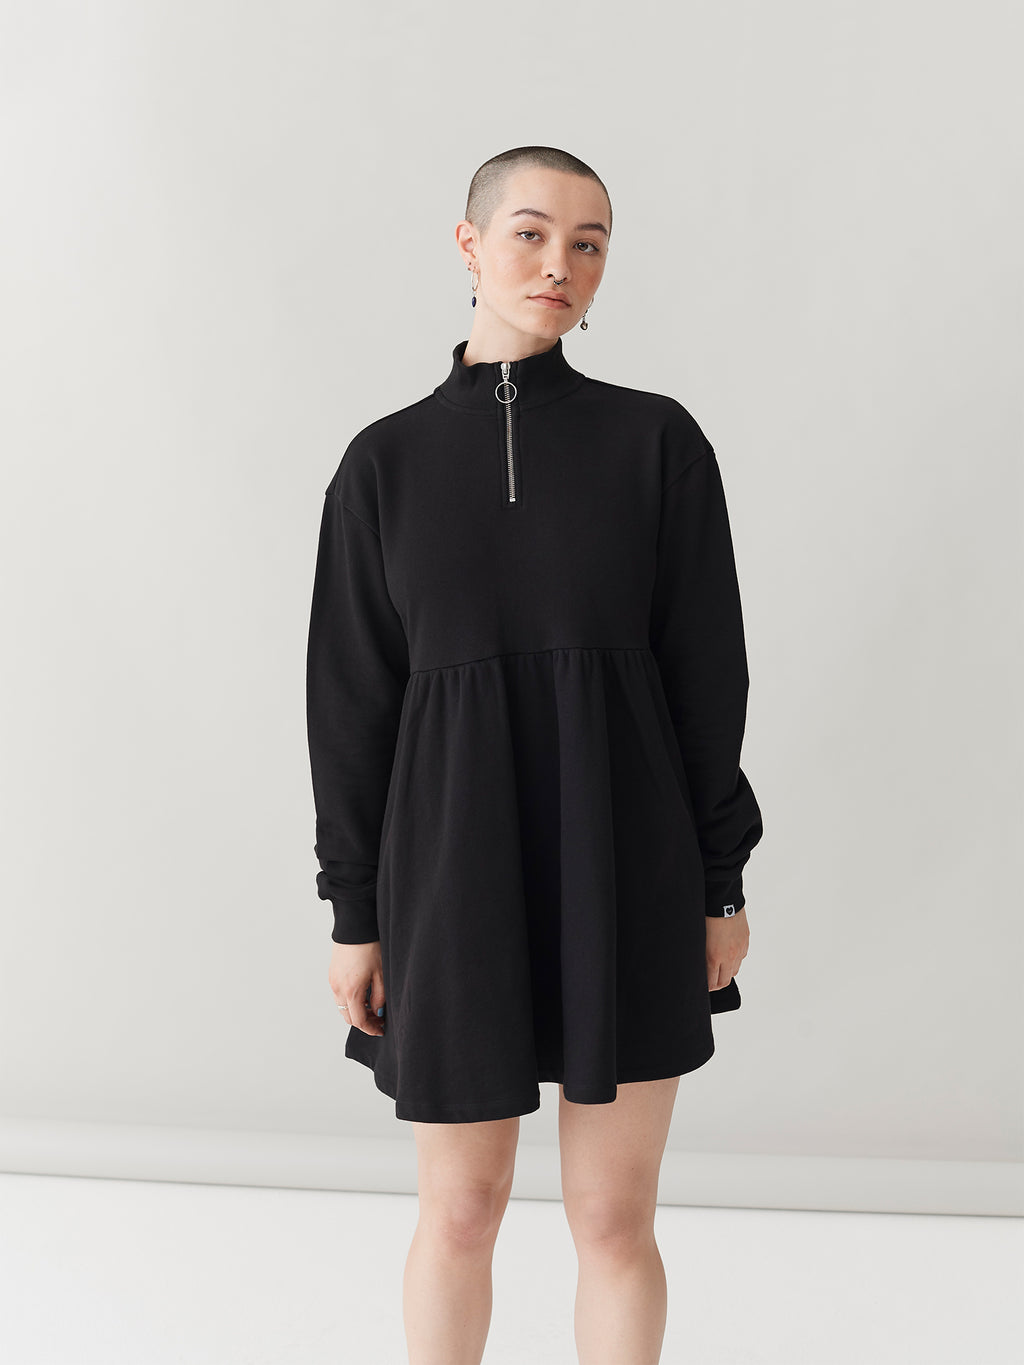 LO Sally Sweater Dress - Black